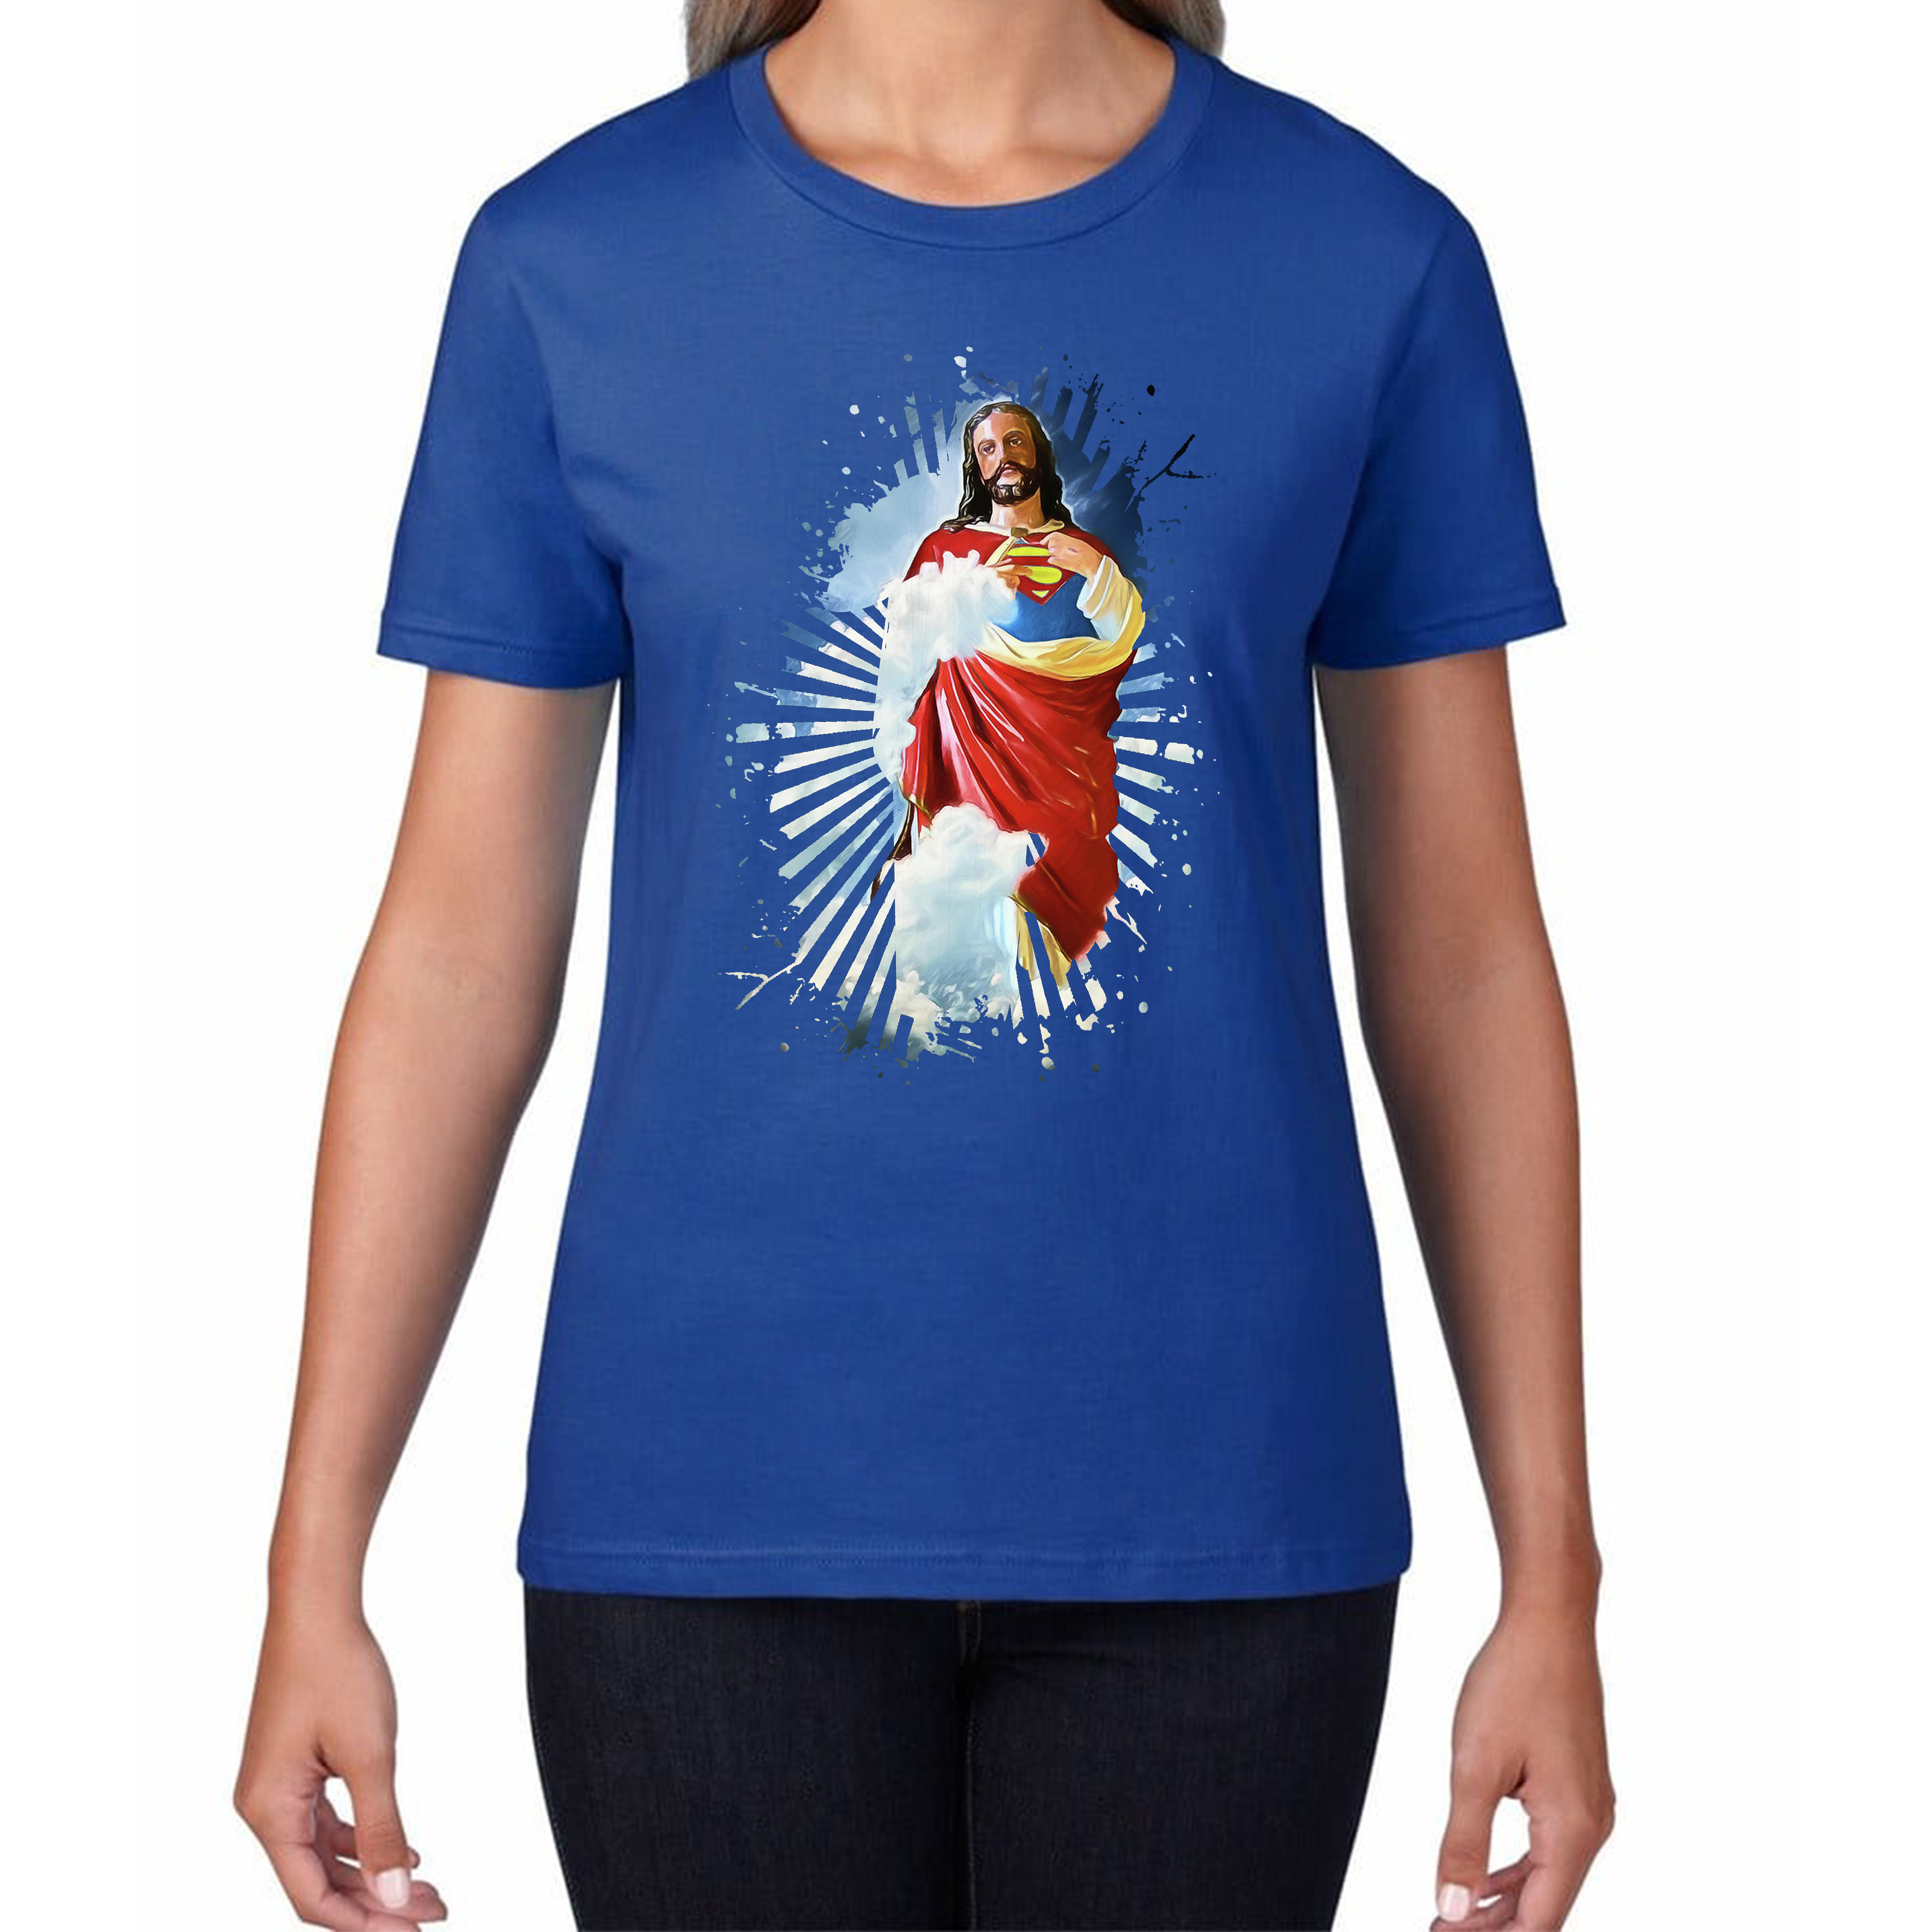 Jesus Christ Superman T-shirt Superman Inspired Spoof Avengers Superhero Christian Gift Womens Tee Top